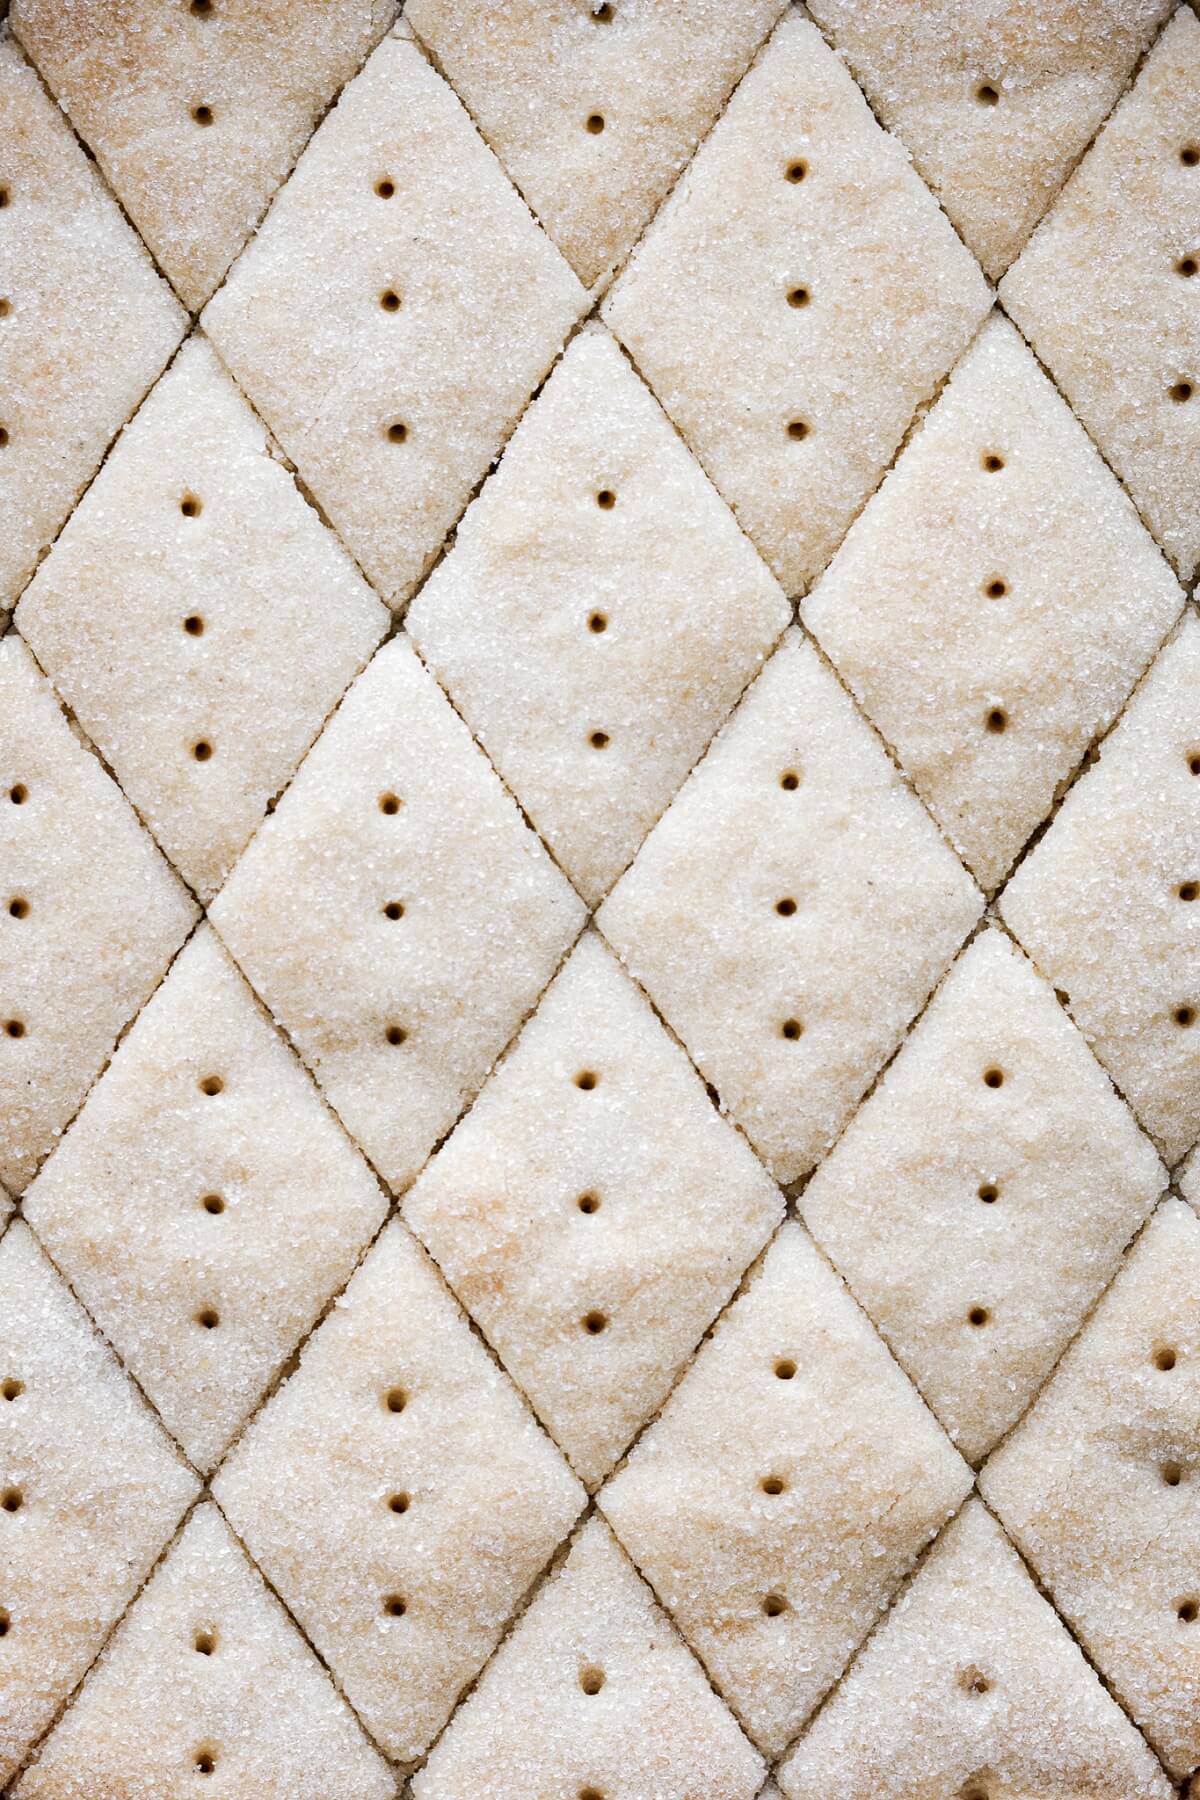 Almond shortbread cookies cut into diamond shapes.